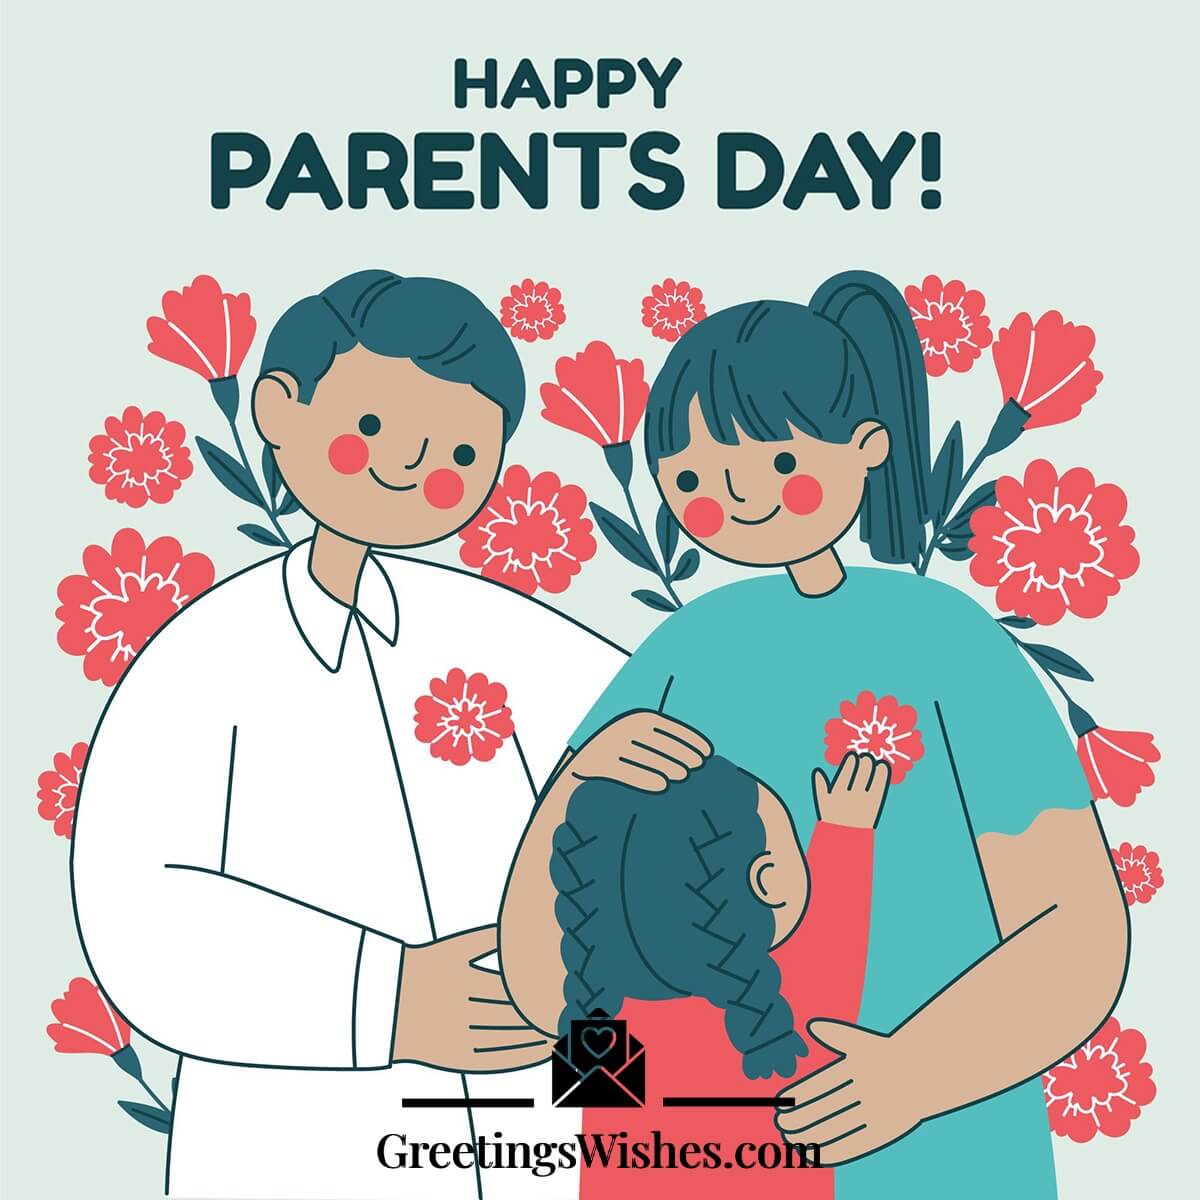 Happy Parents Day Image